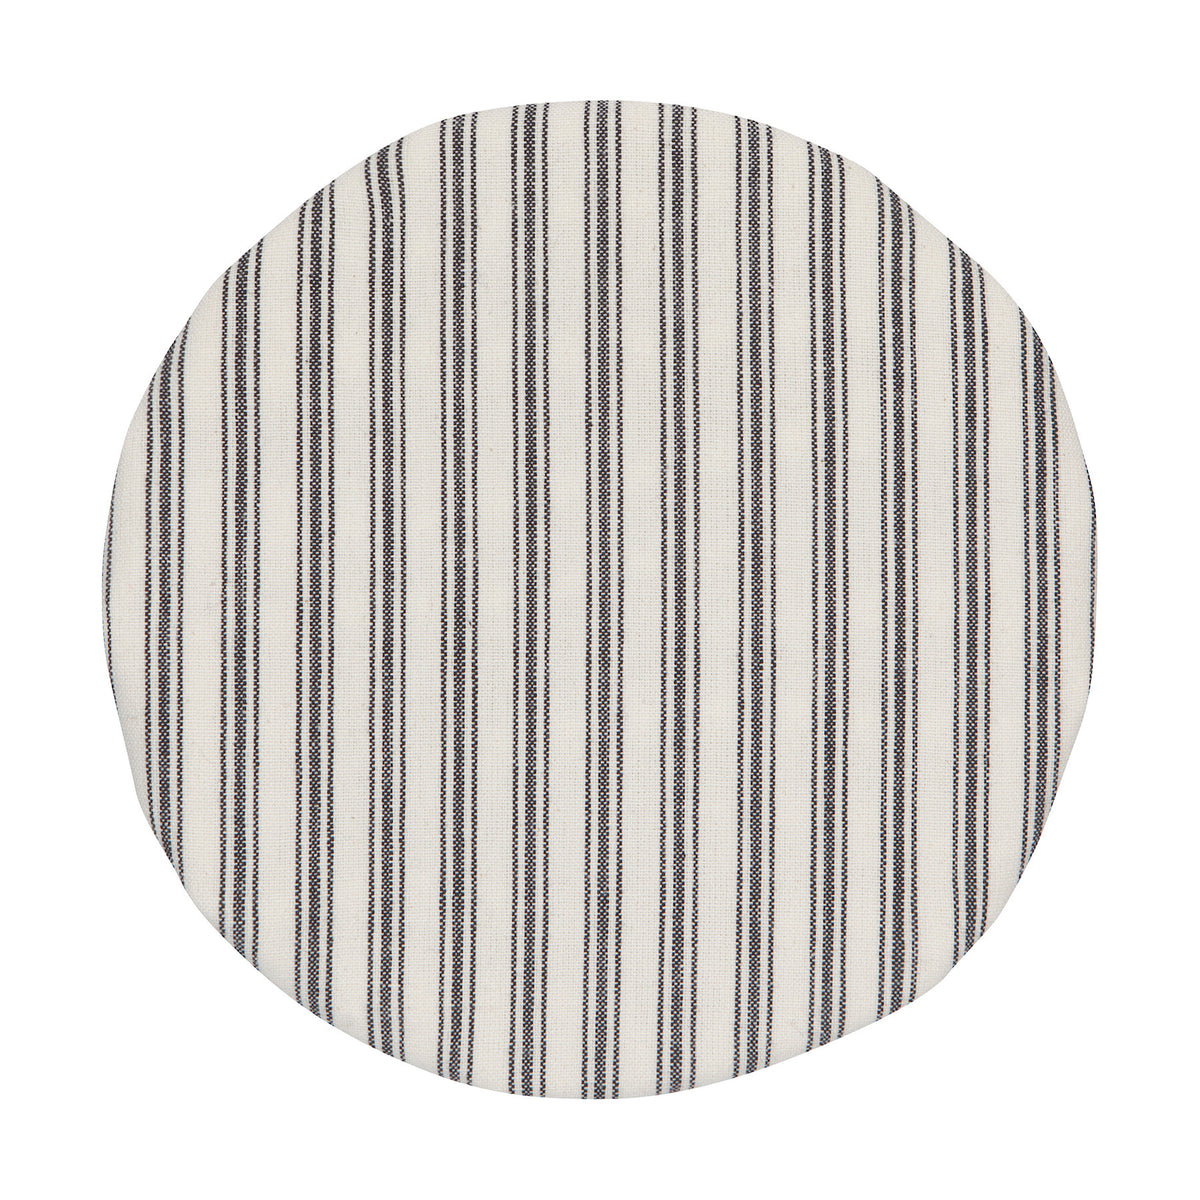 Ticking Stripe Bowl Cover, Set of 2